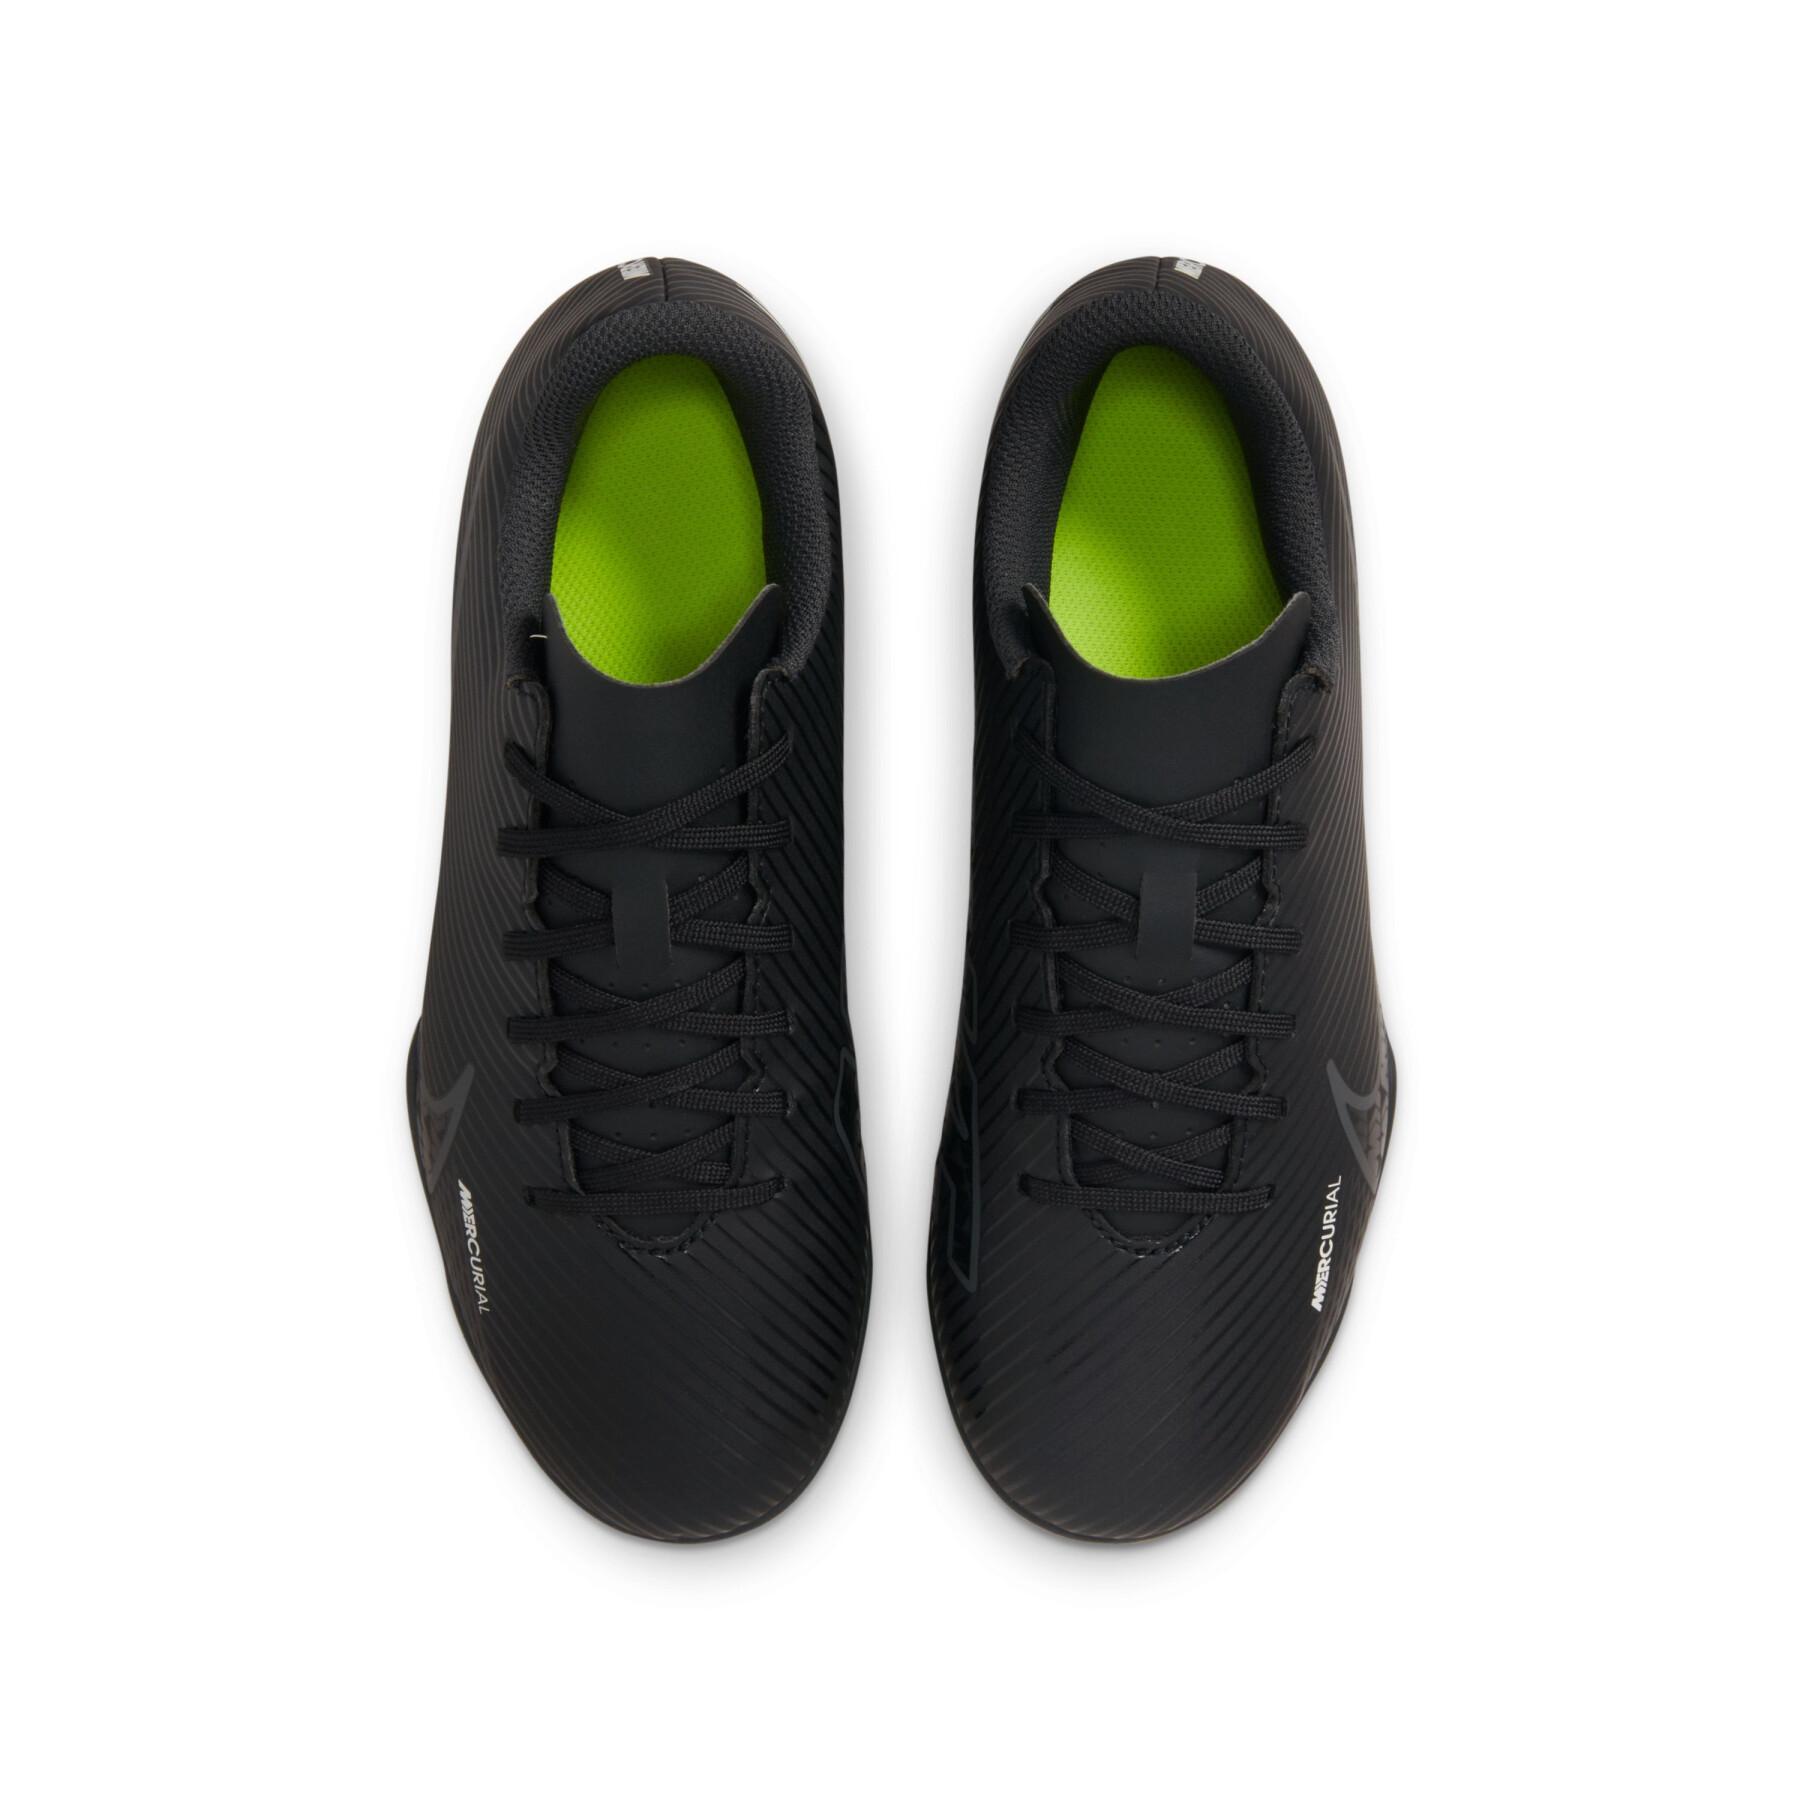 Botas de fútbol para niños Nike Mercurial Vapor 15 Club FG - Shadow Black Pack